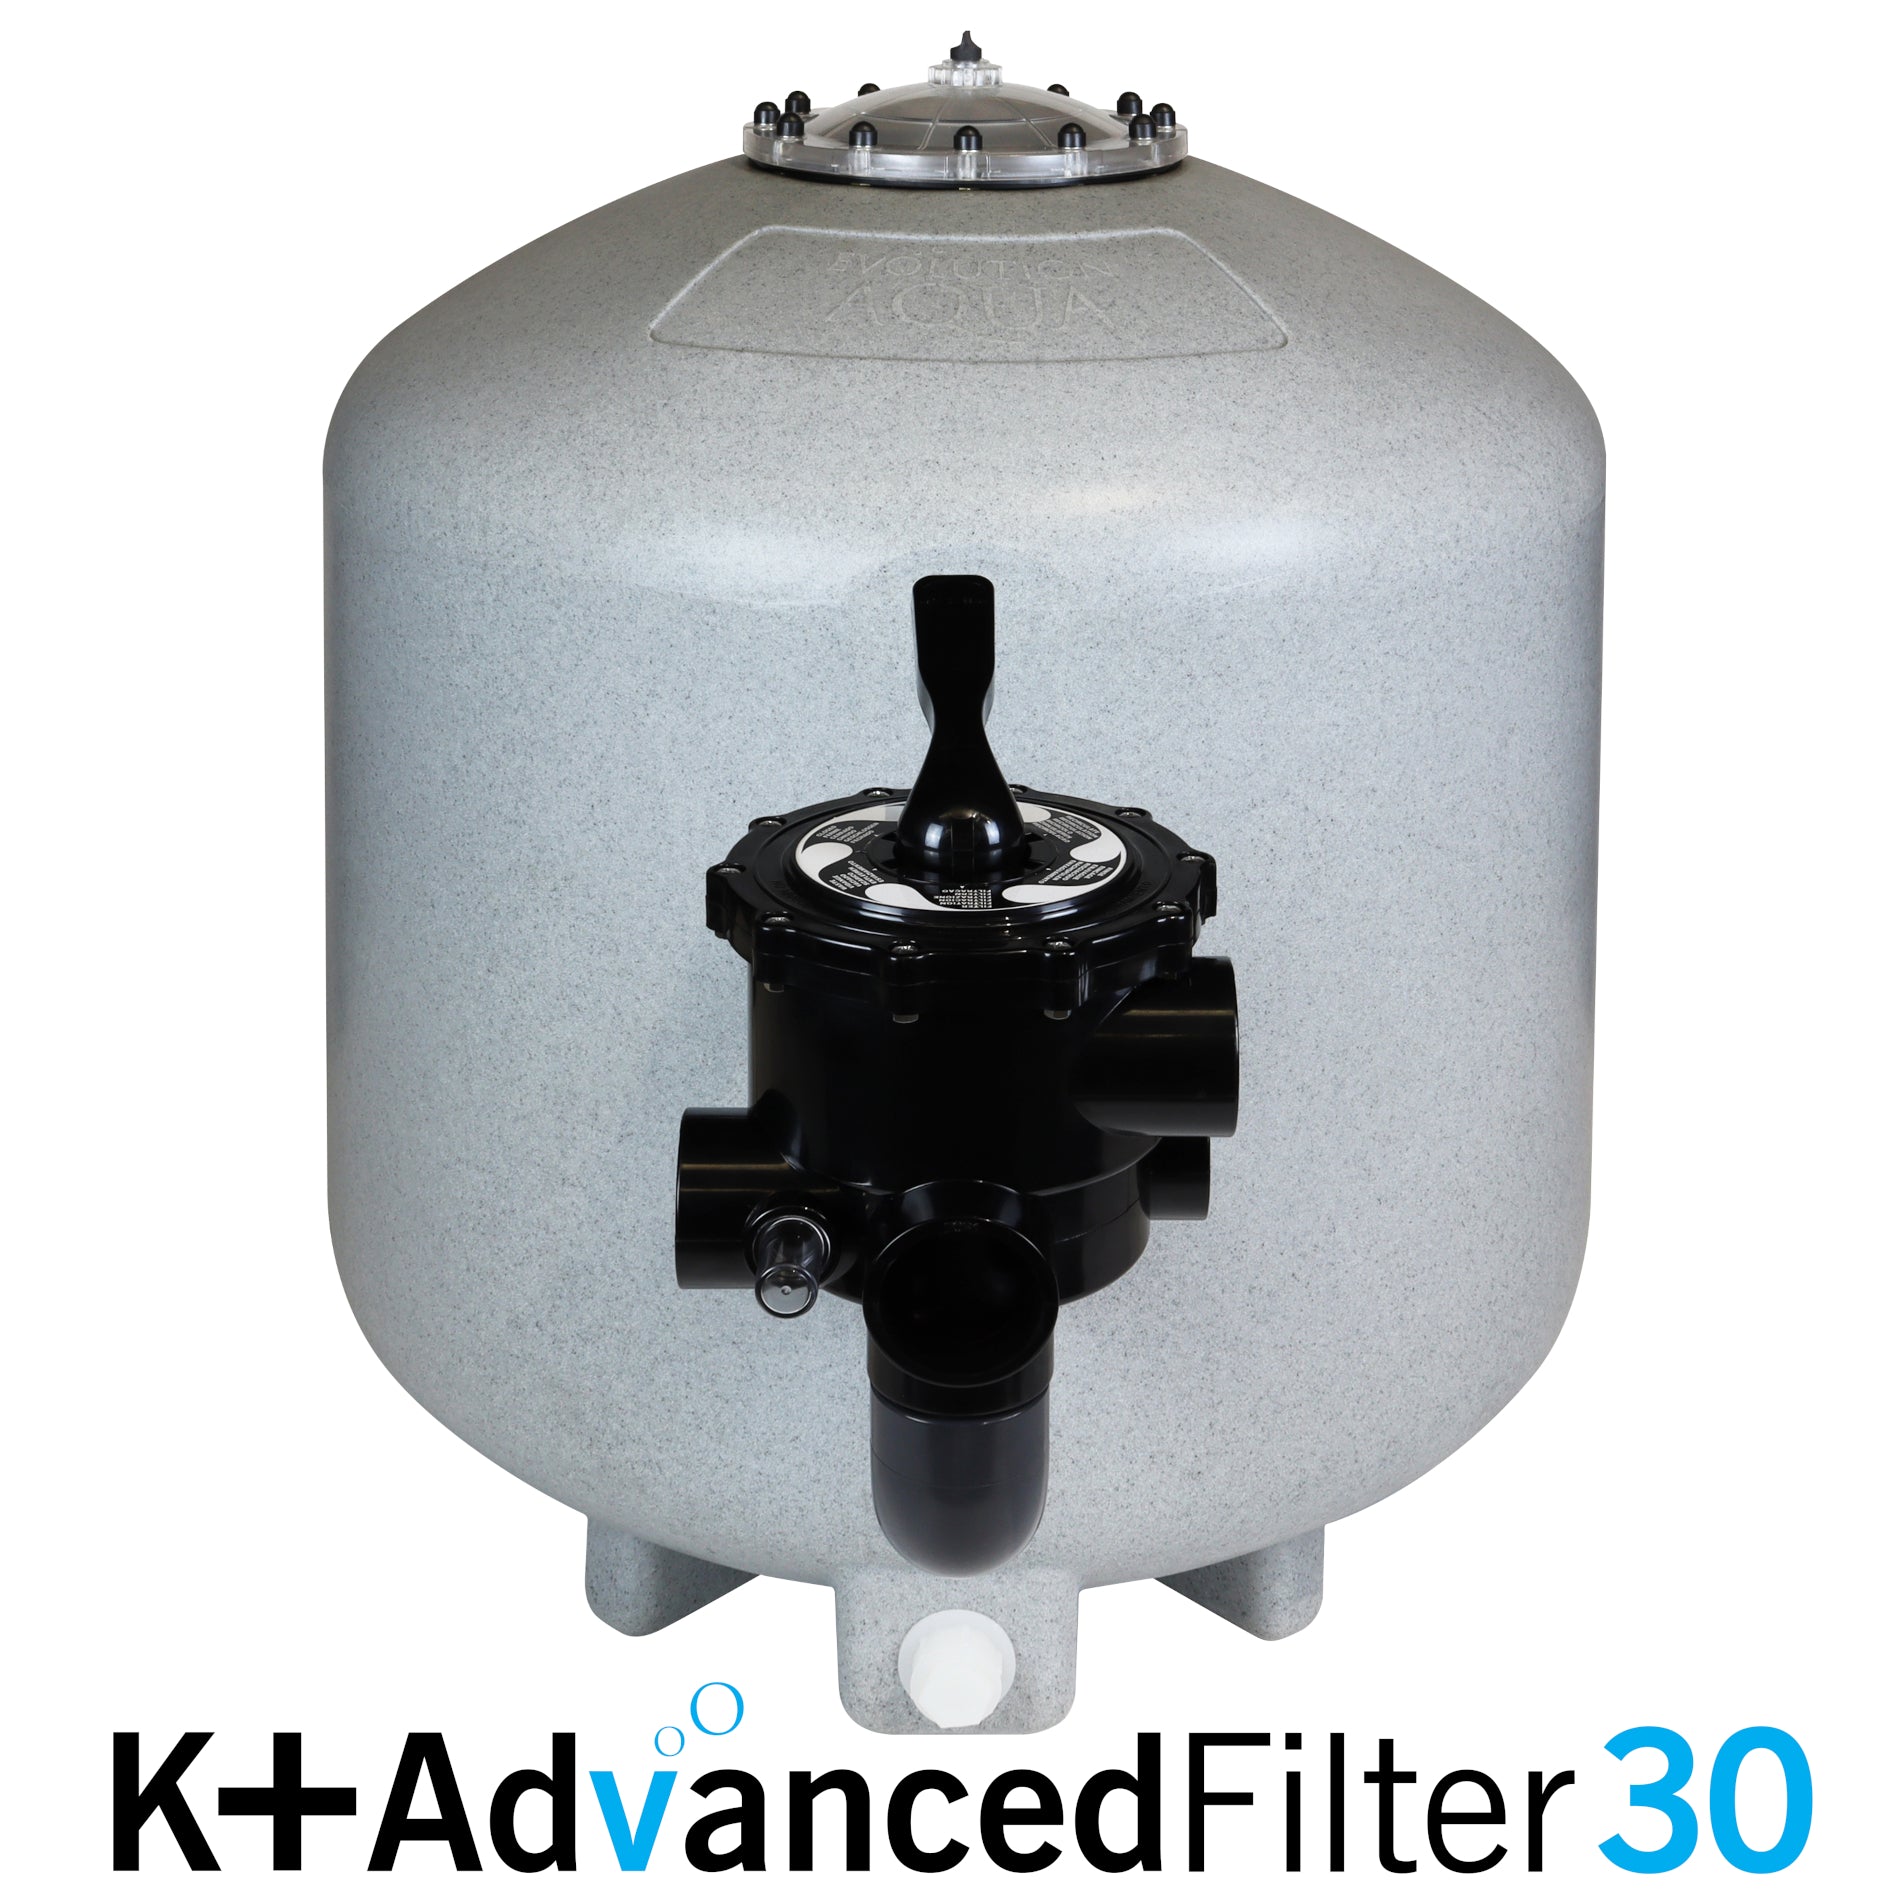 Evolution Aqua Pressure Pond K+ Advanced Filter 30